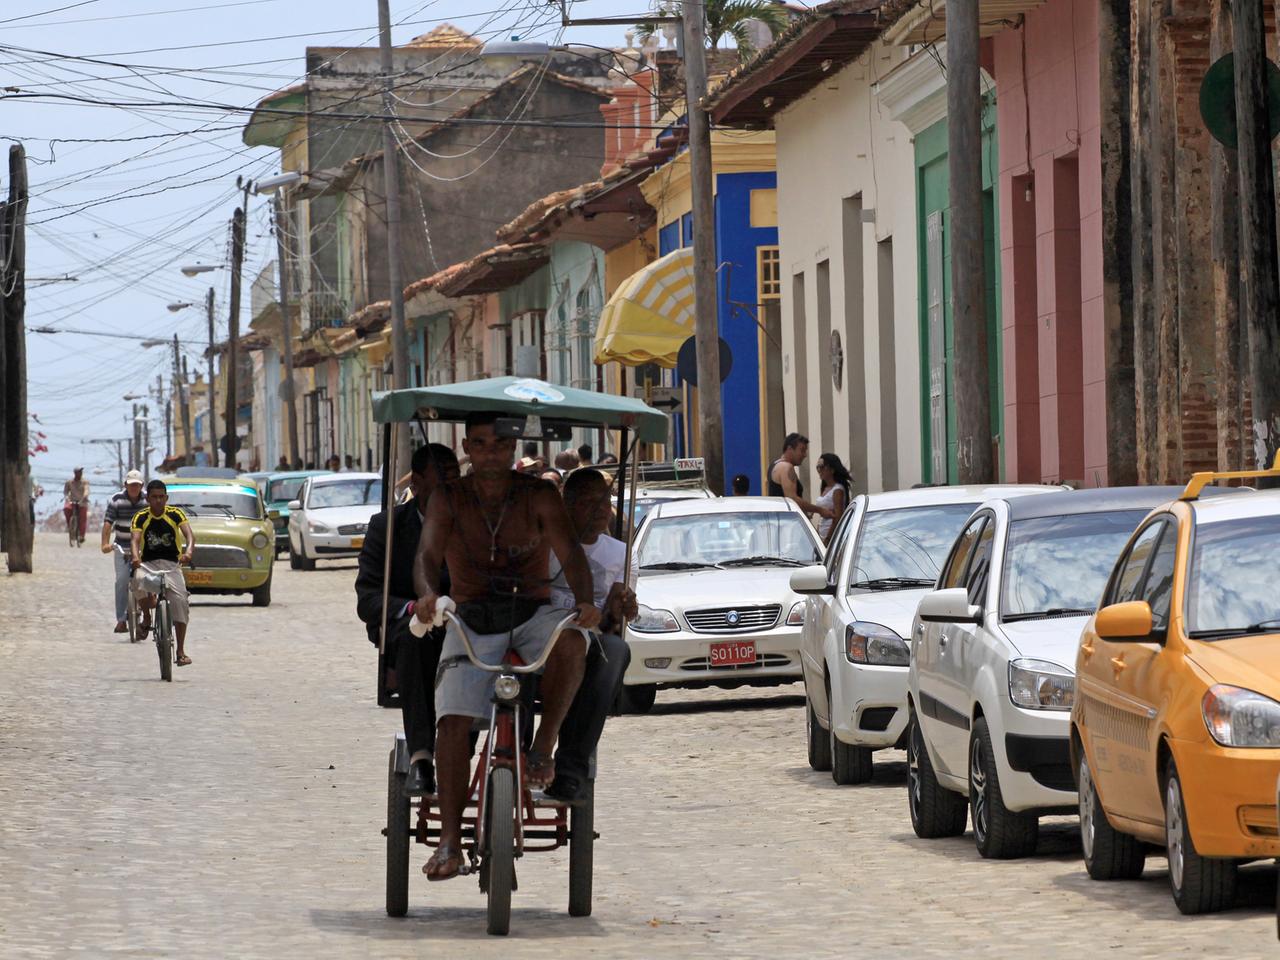 Straßenszene in Trinidad, Kuba